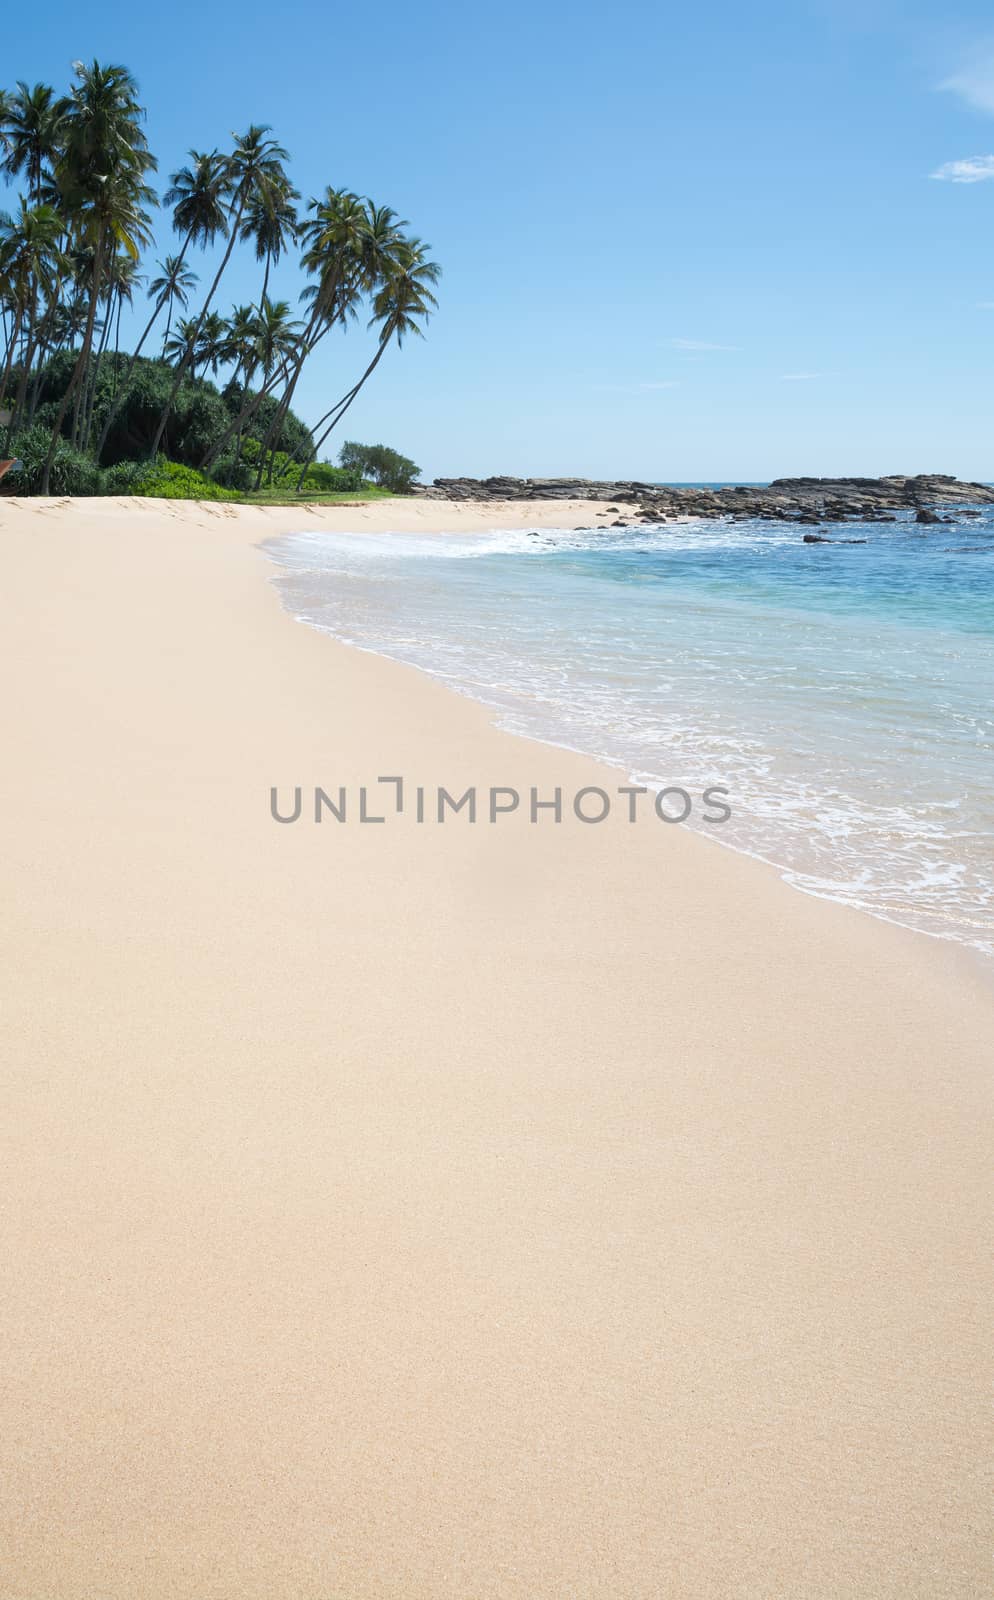 Paradise beach. Beach with fine white sand, coconut palm trees. Southern Province, Sri Lanka, Asia.